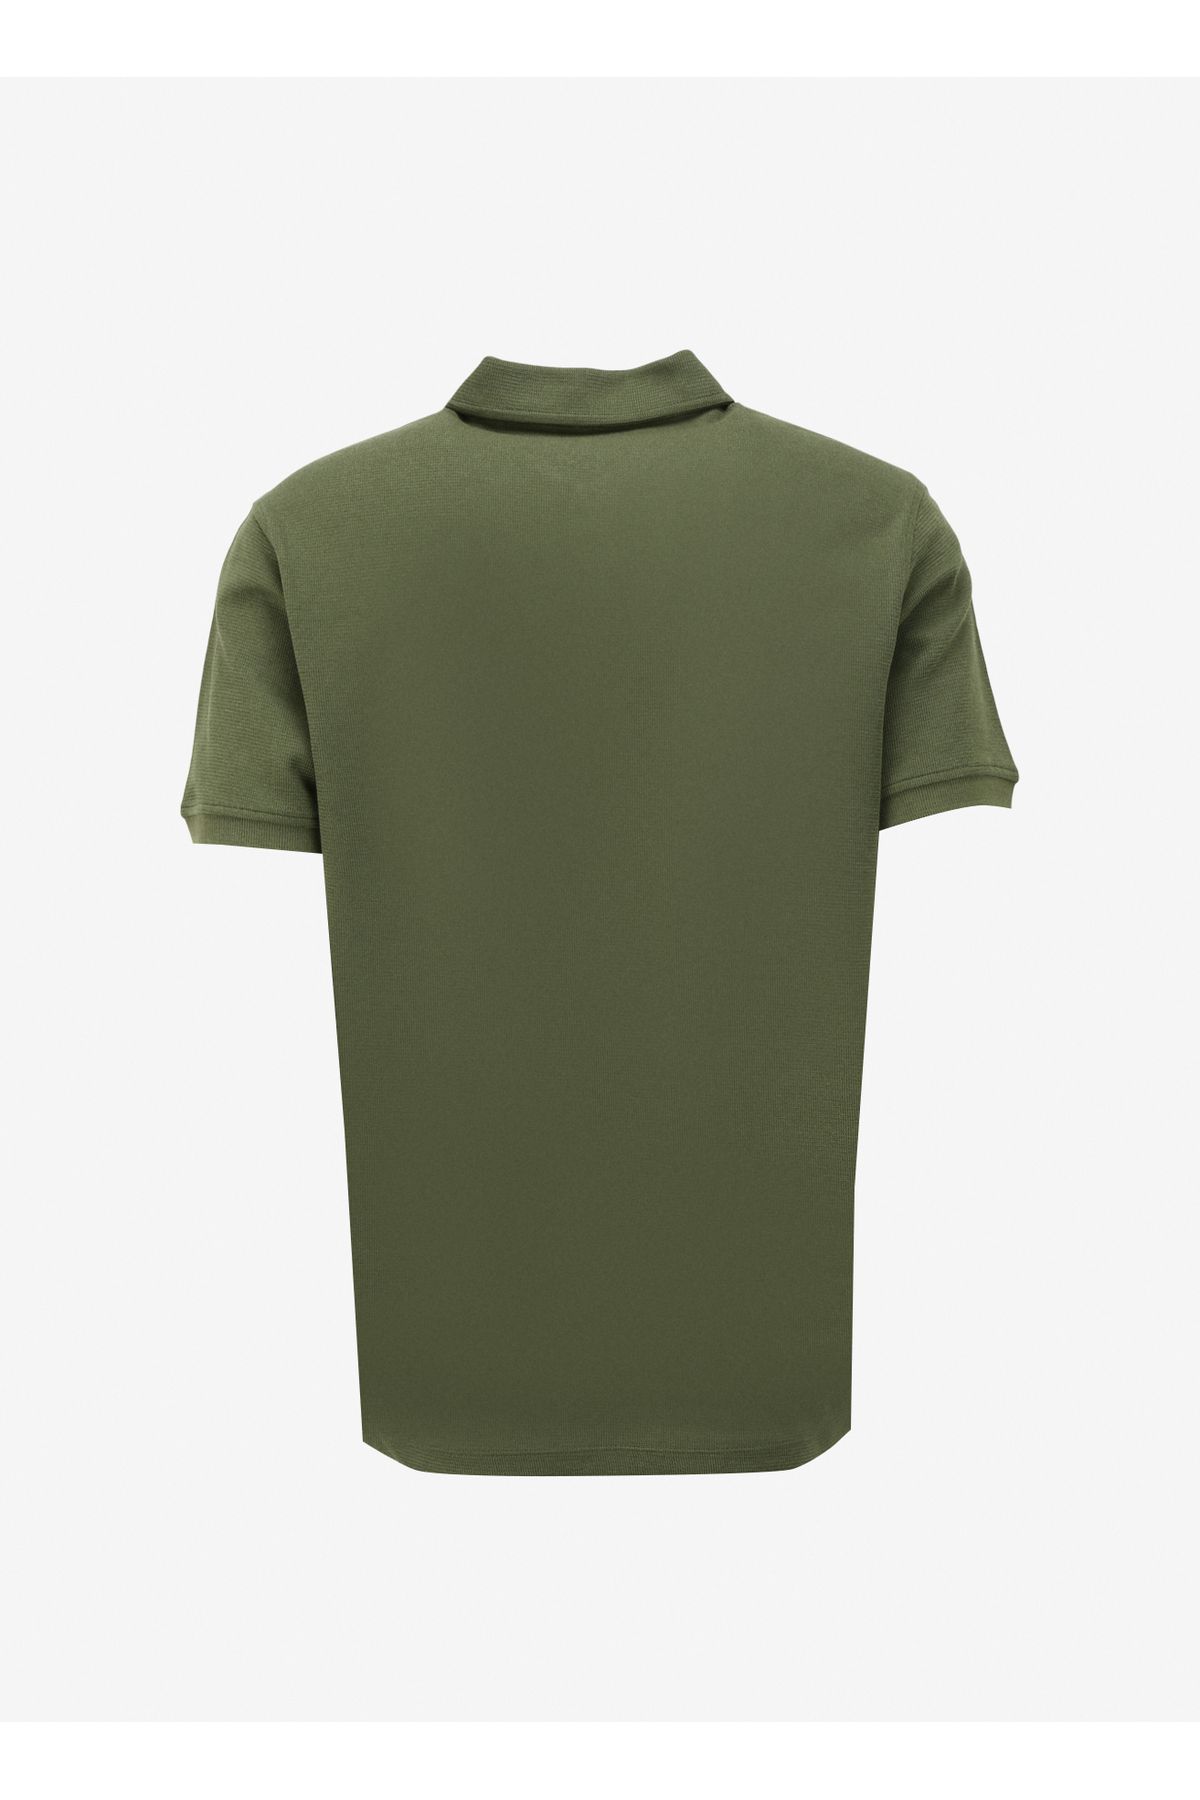 Wrangler تی شرت چوگان مردان سبز روغن W241557308 آستین کوتاه